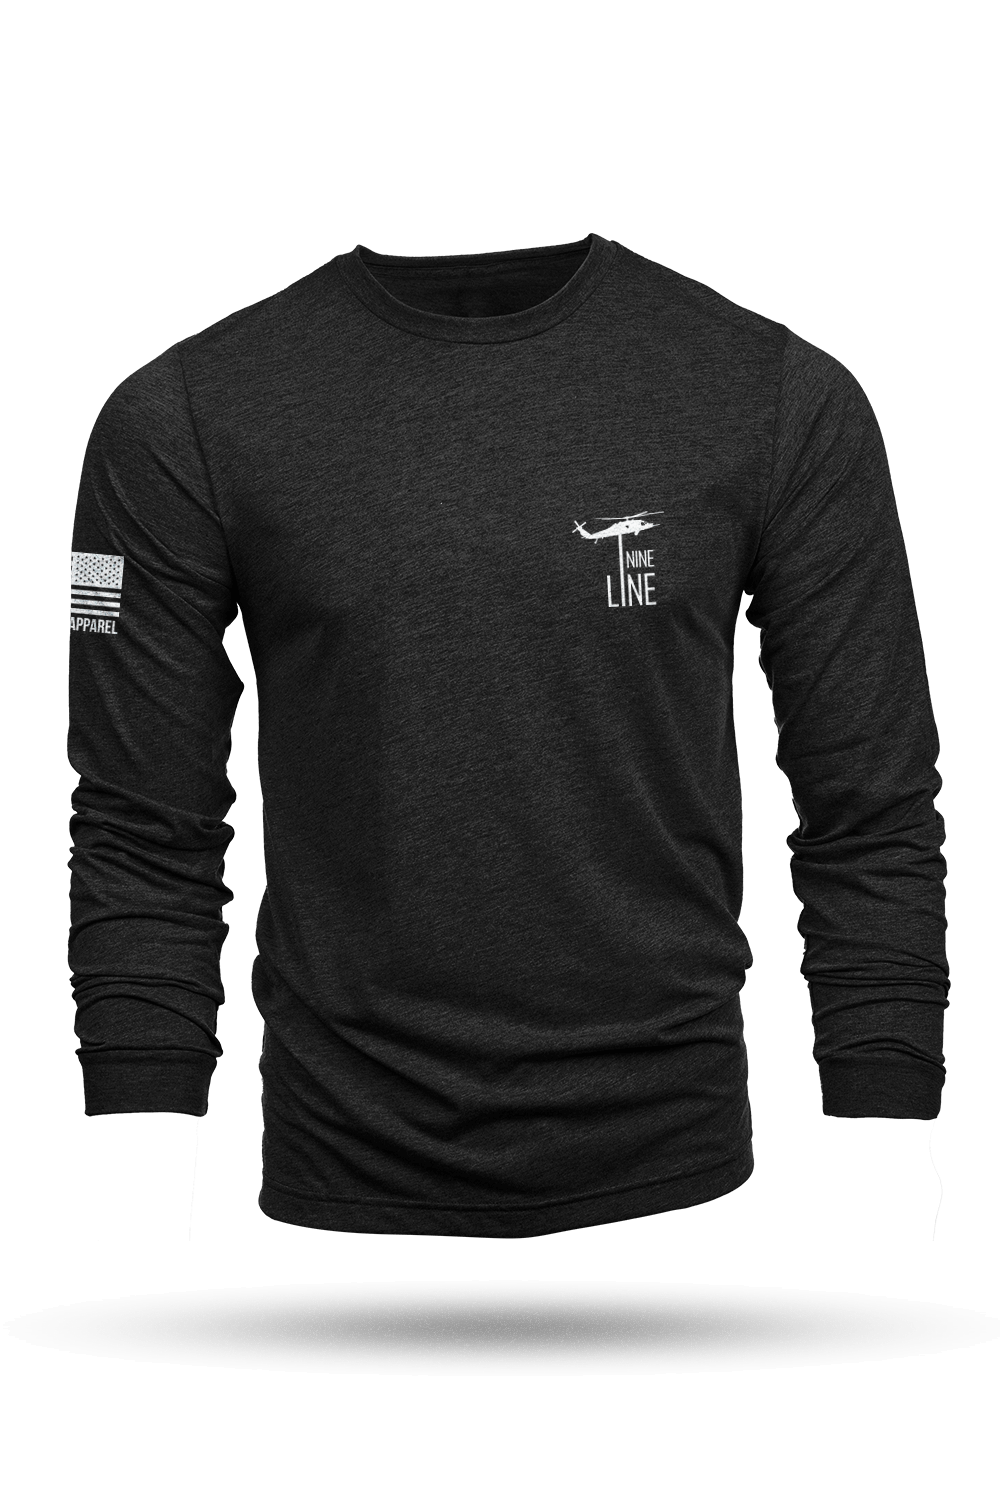 Long-Sleeve Shirt - ALL AMERICAN WHISKEY